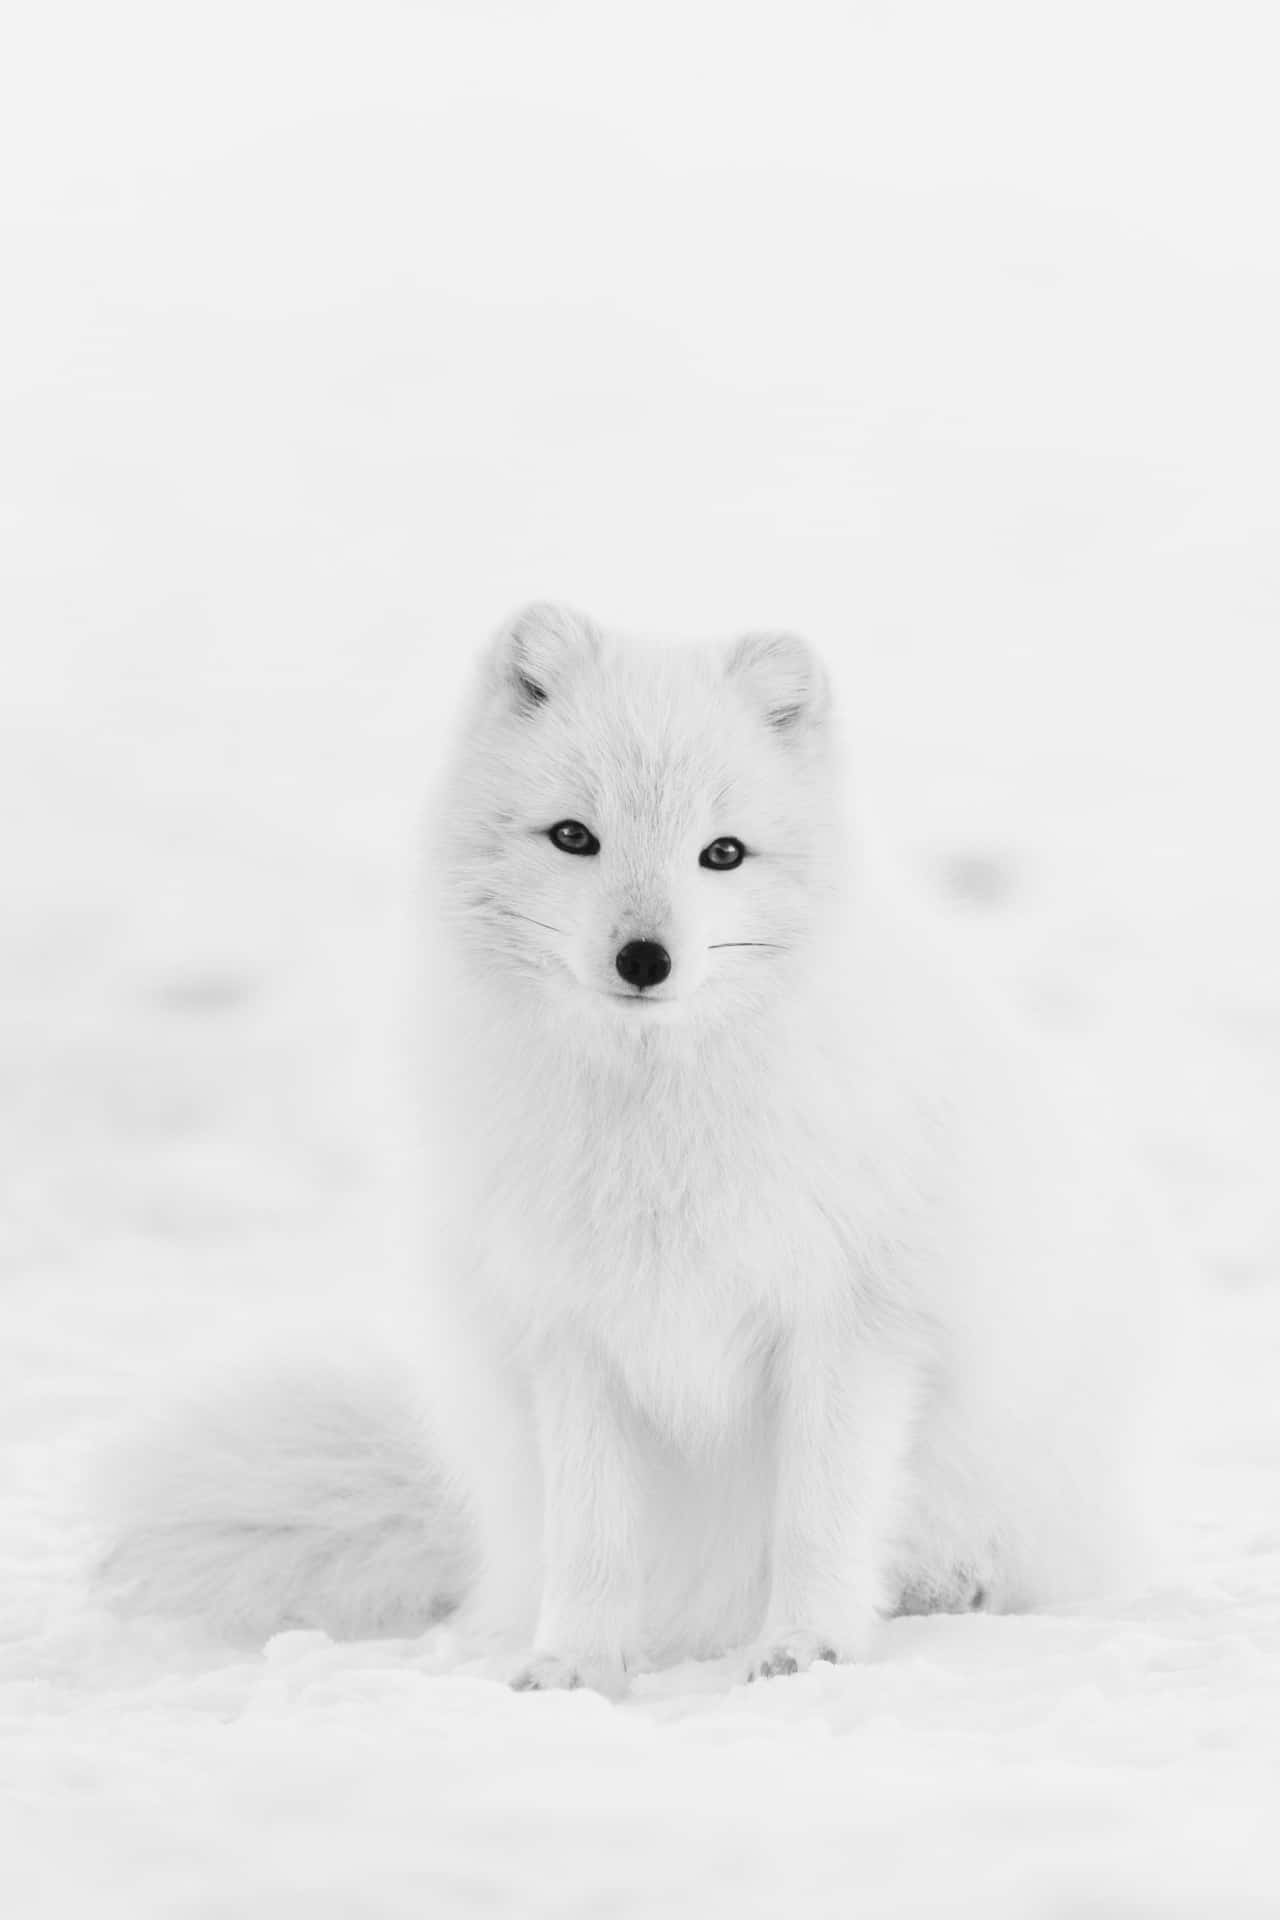 An arctic fox peers curiously against a backdrop of snowy terrain.